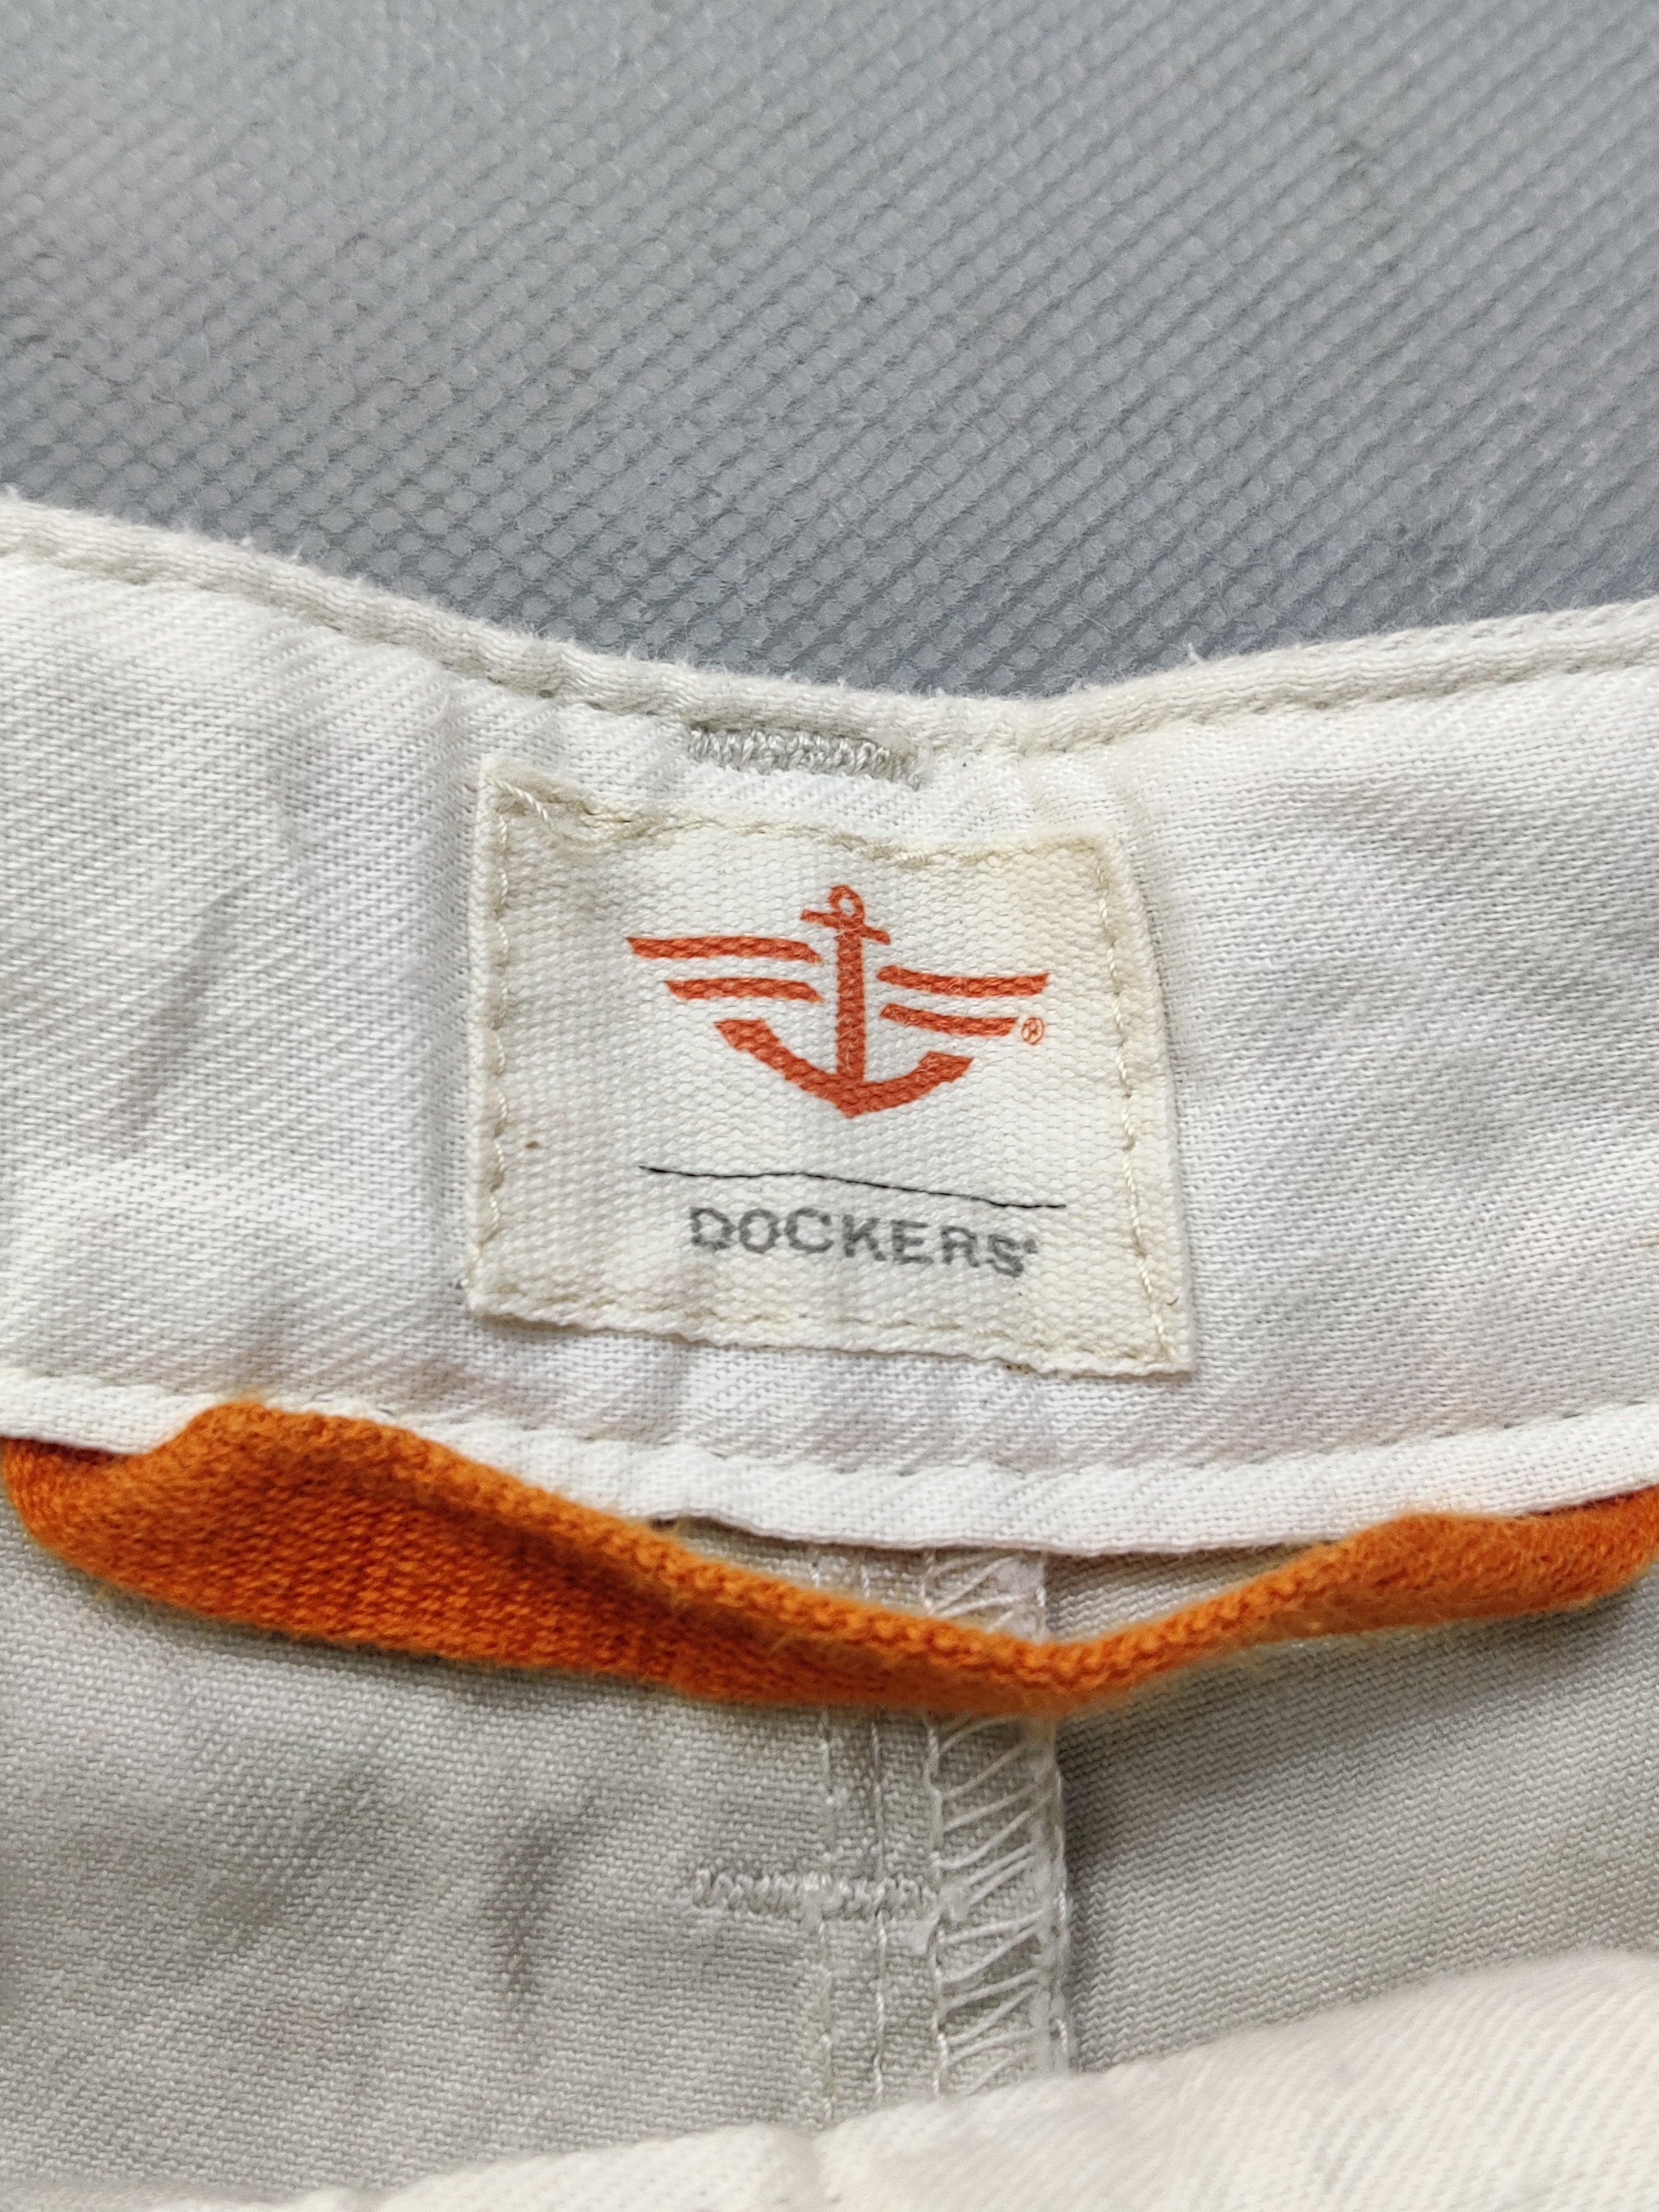 Dockers Branded Original Cotton Short For Men